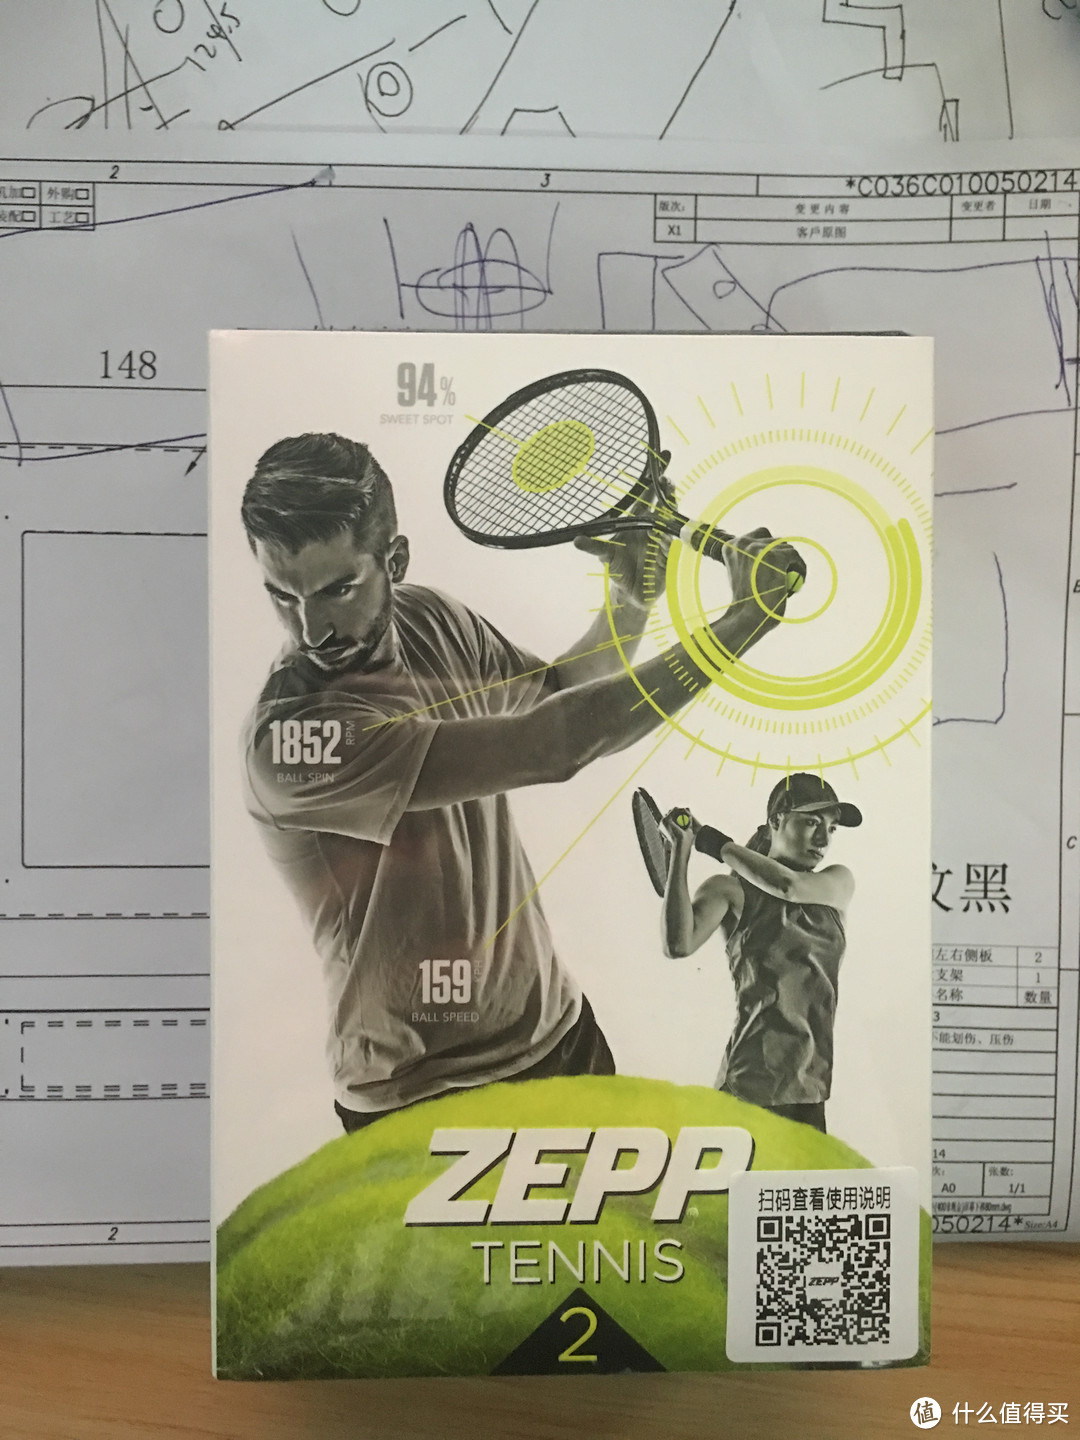 ZEPP Tennis 2 网球传感器